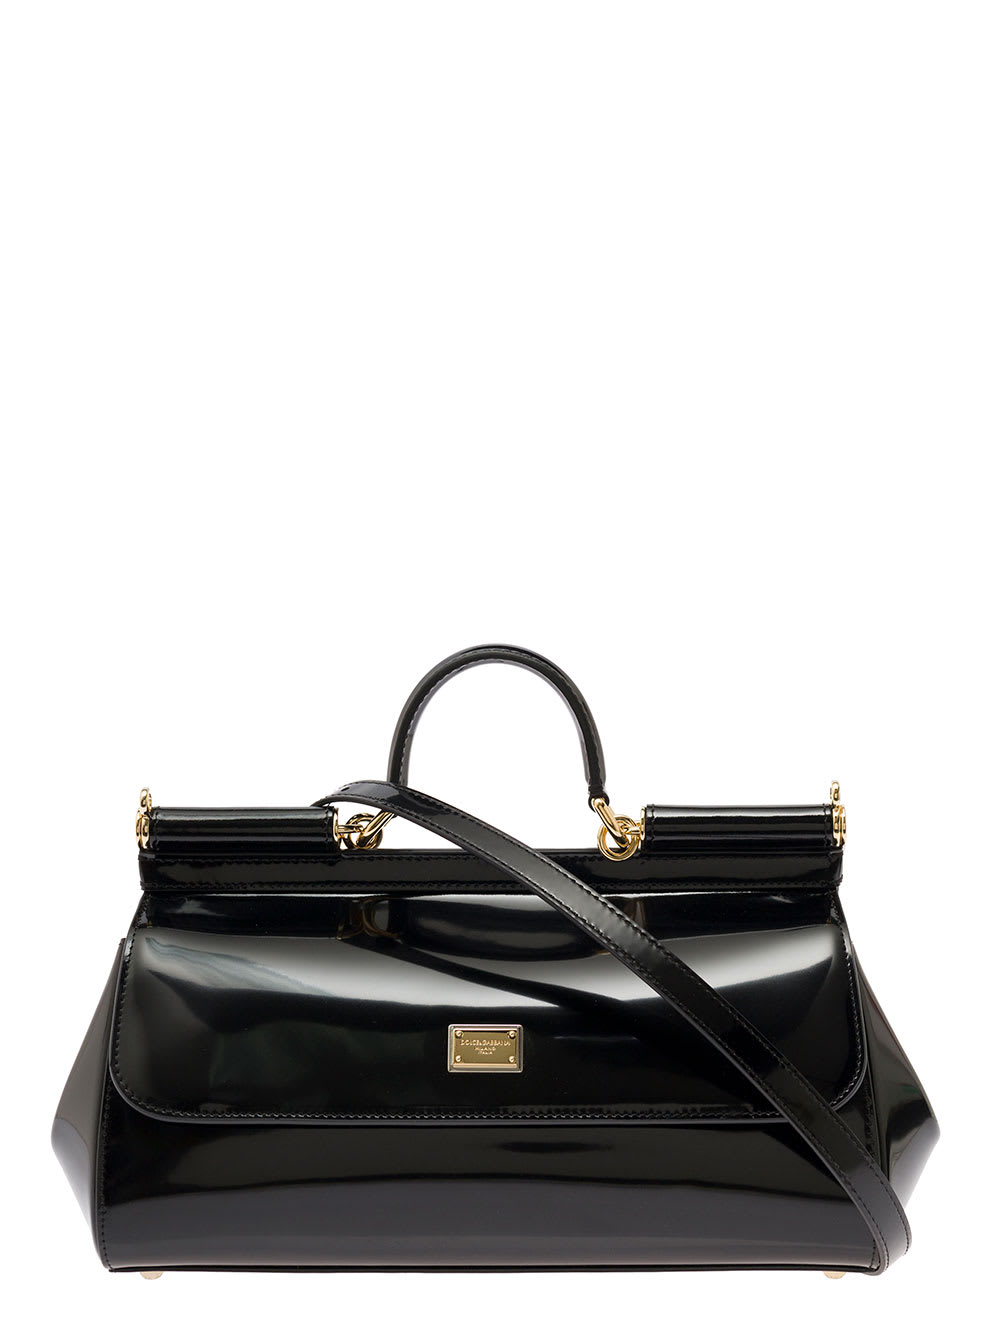 siciliy Medium Black Patent Leather Handbag Woman Dolce & Gabbana